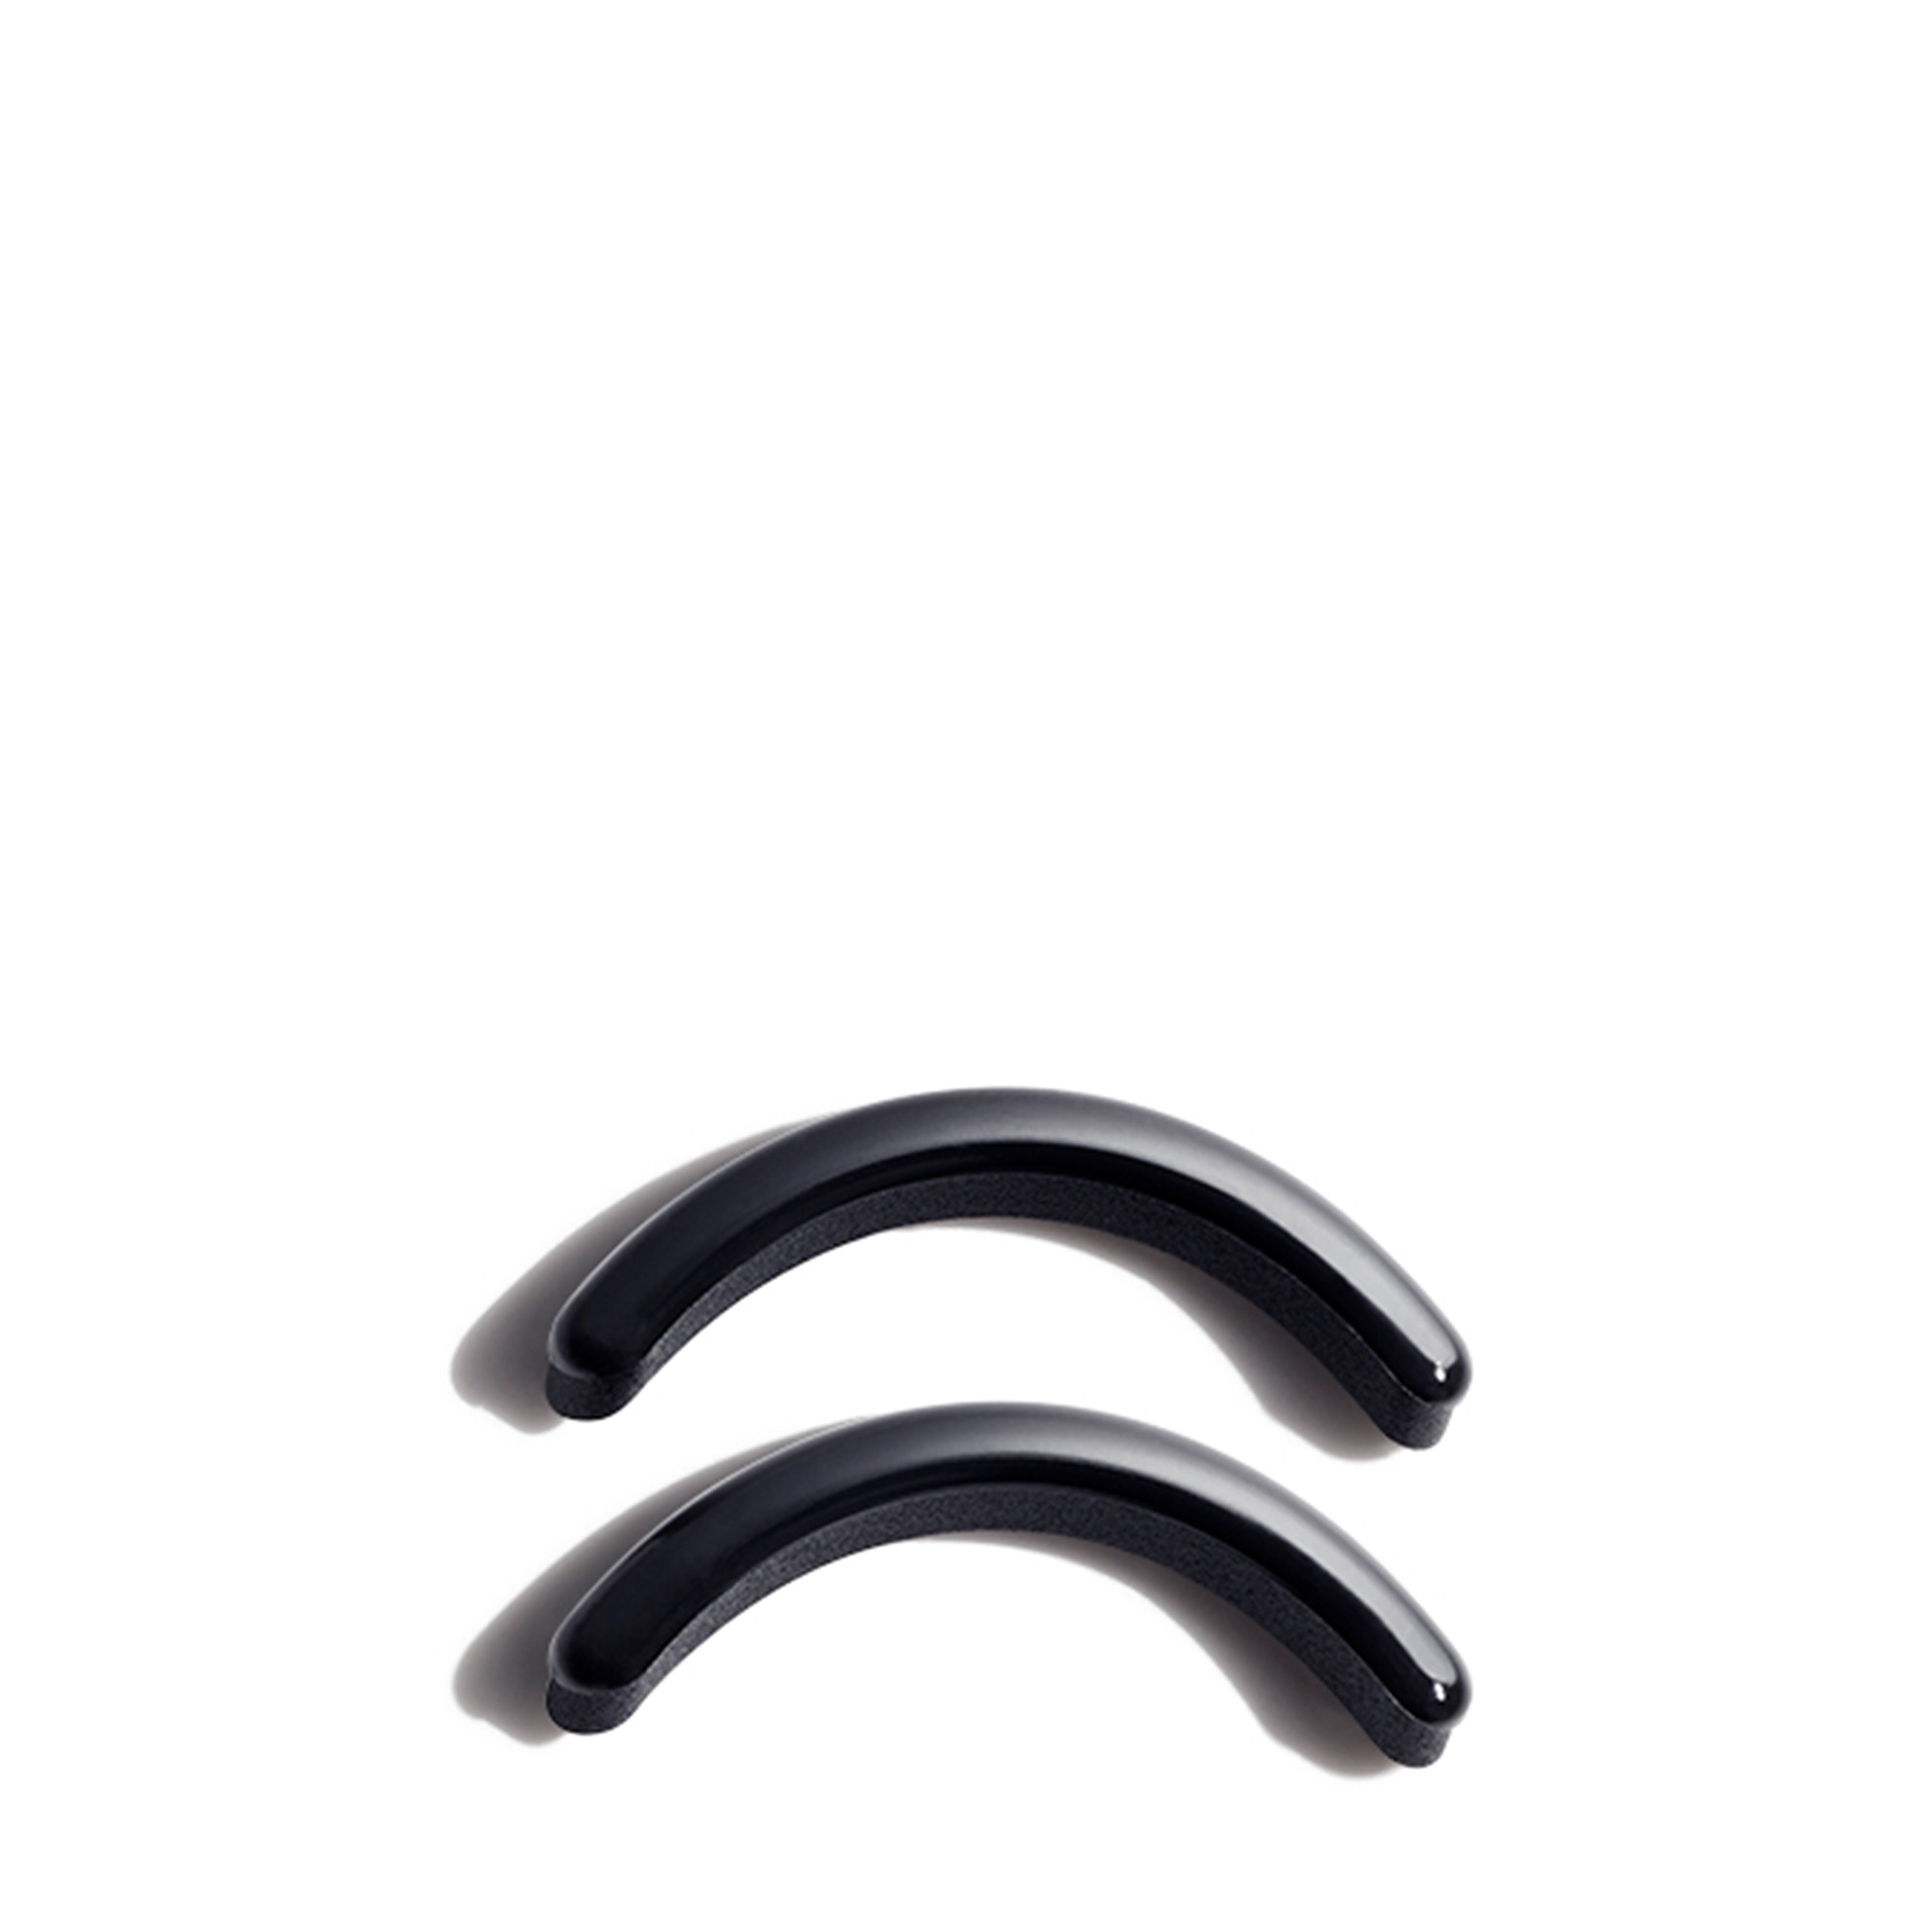 shu uemura eyelash curler rubber replacement